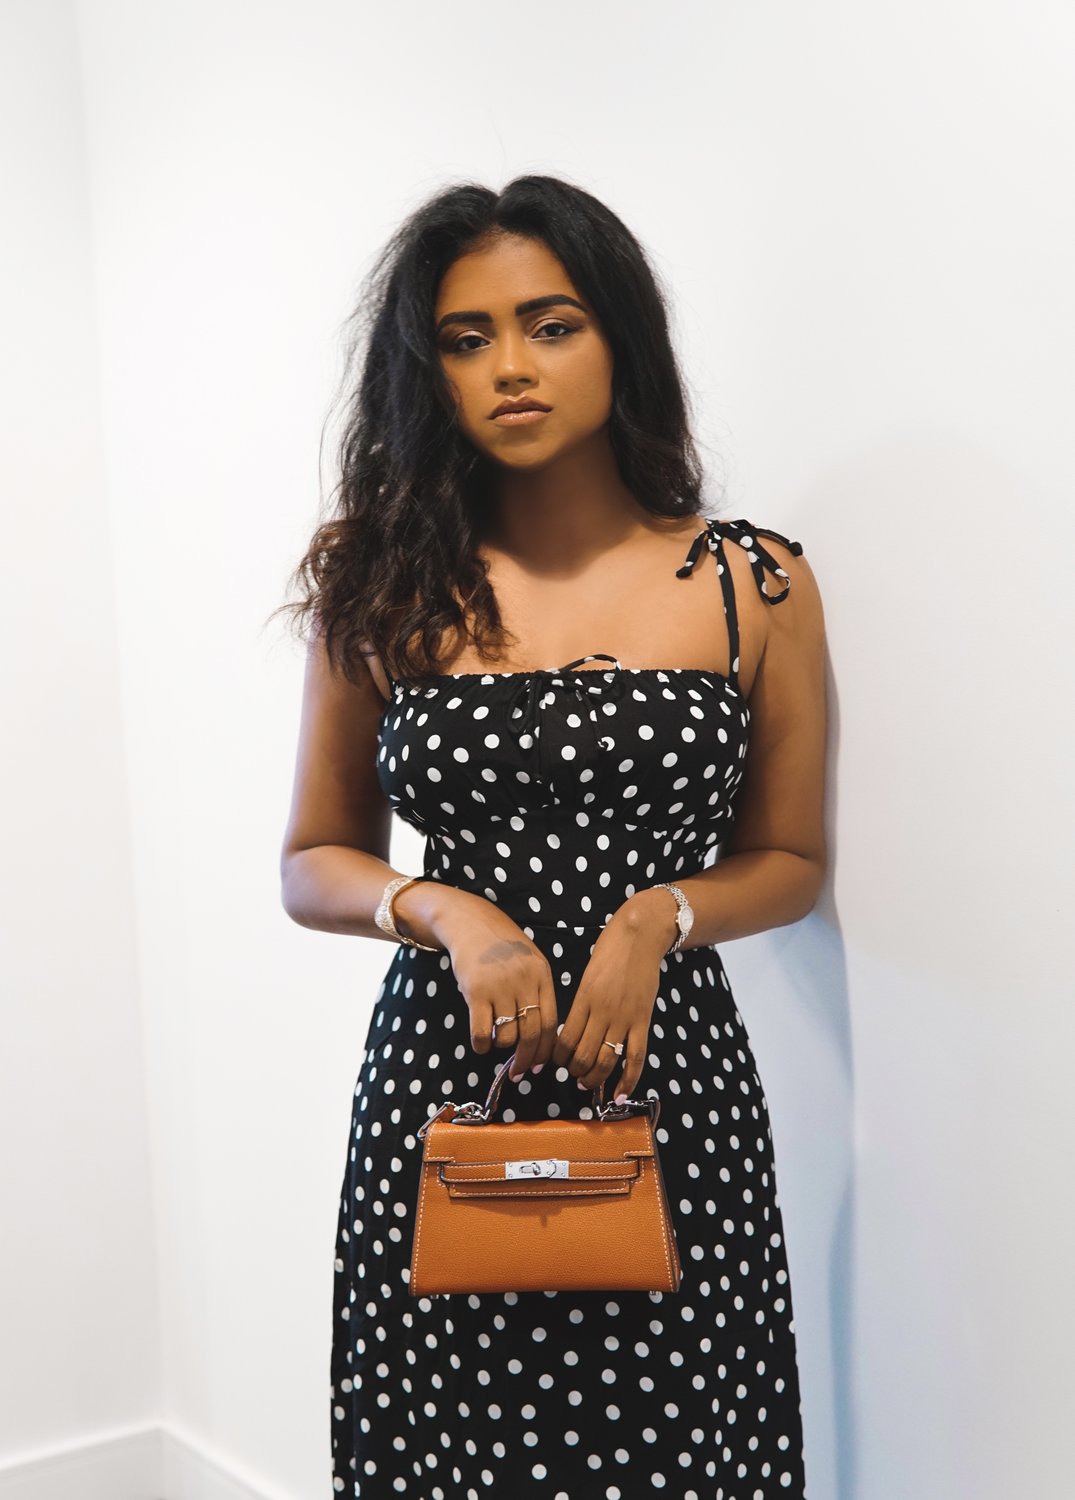 Sachini wearing a black and white Reformation polkadot dress holding a brown Hermès mini Kelly bag